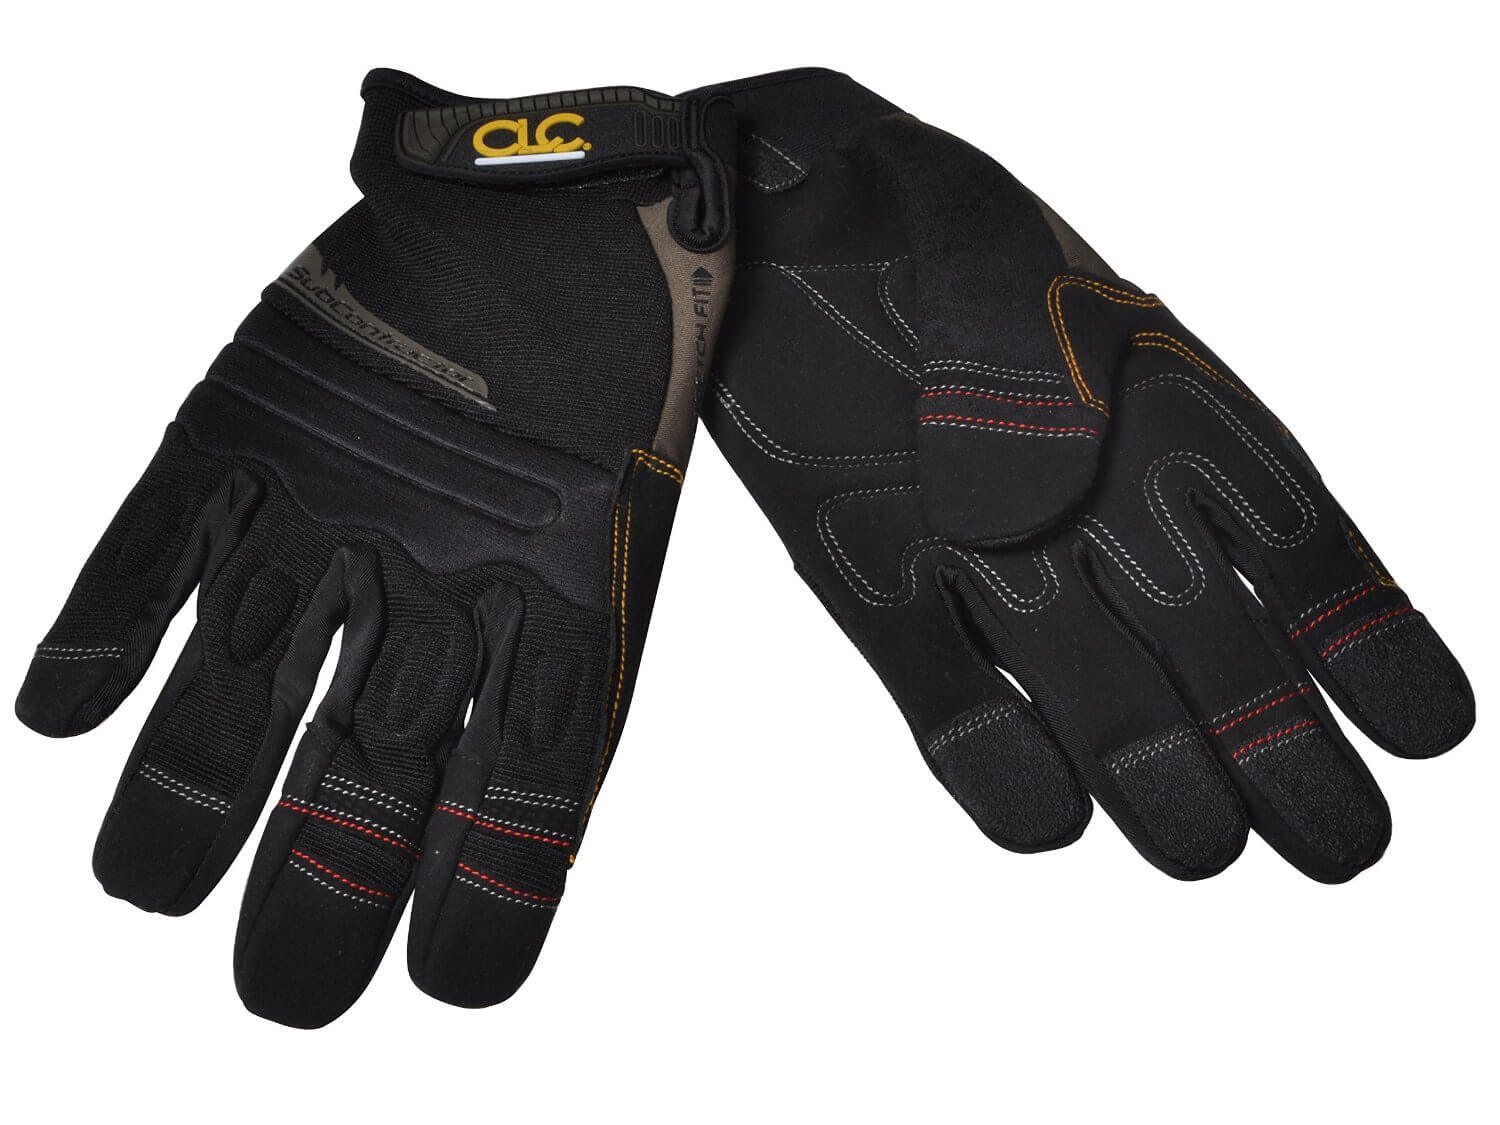 CLC SubContractor Flex Grip Gloves - XLarge - wise-line-tools